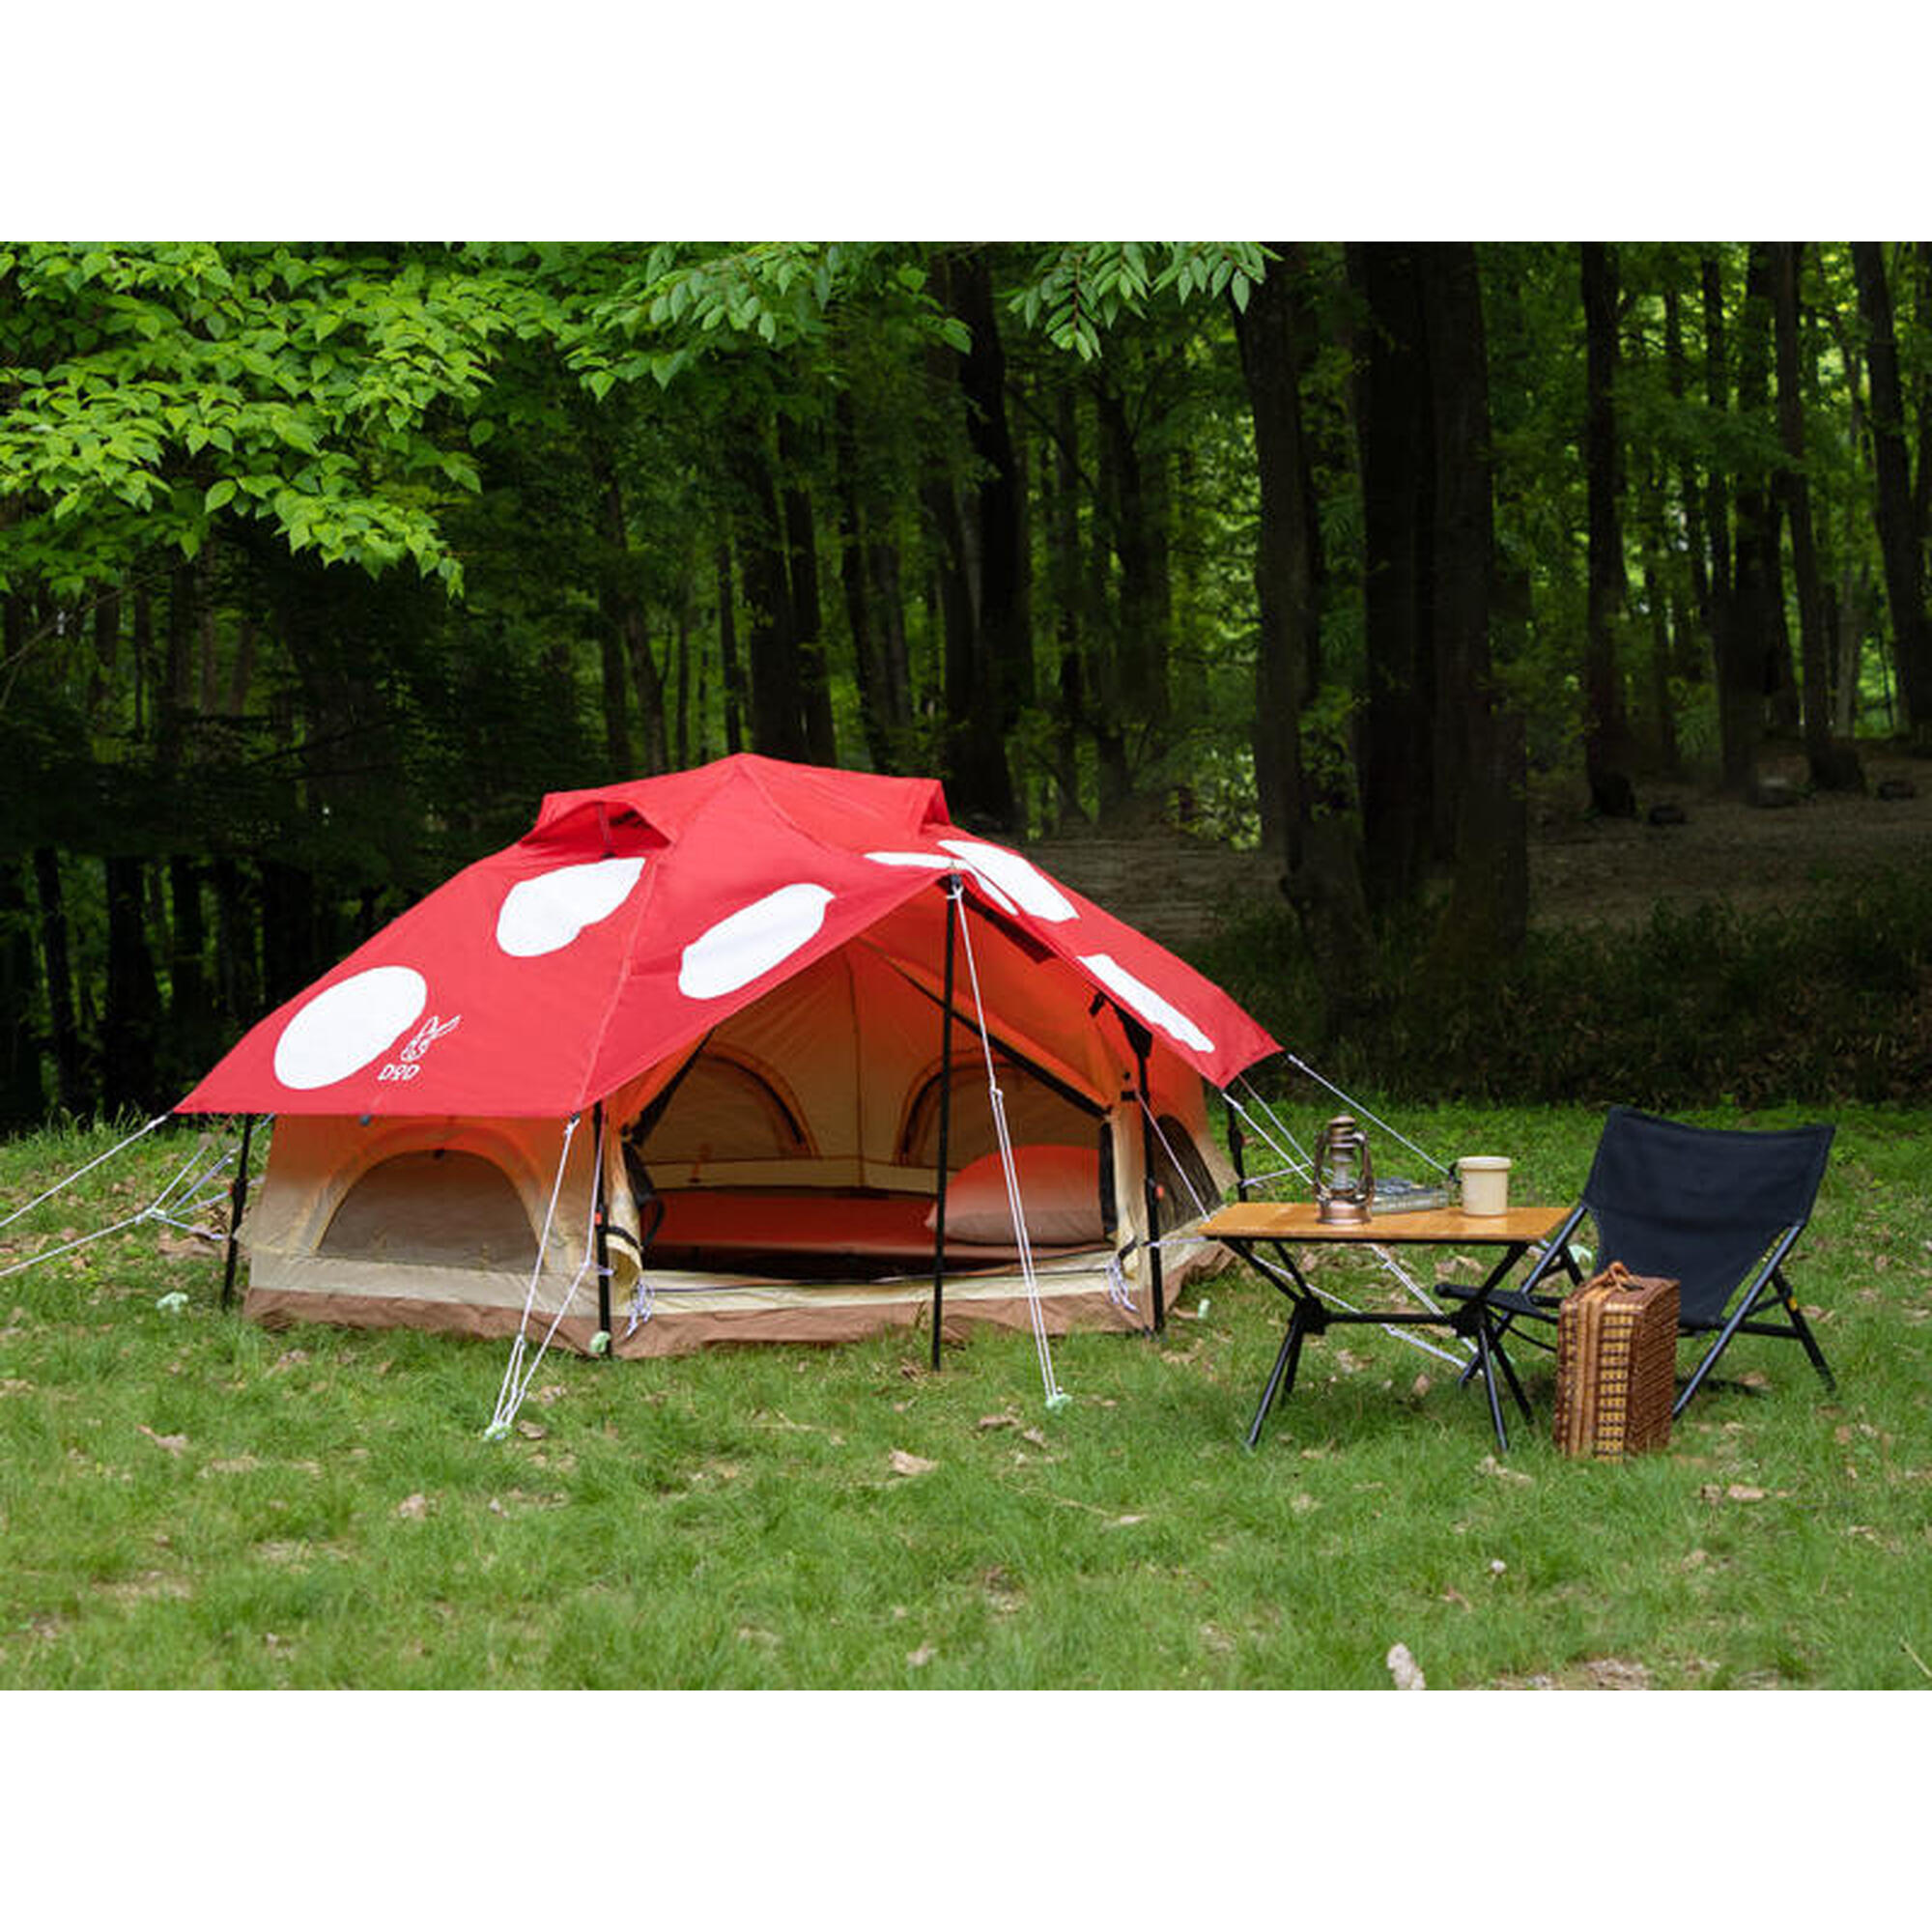 Mini kinoko tent T2-930-RD 蘑菇2人露營帳篷 - 紅色